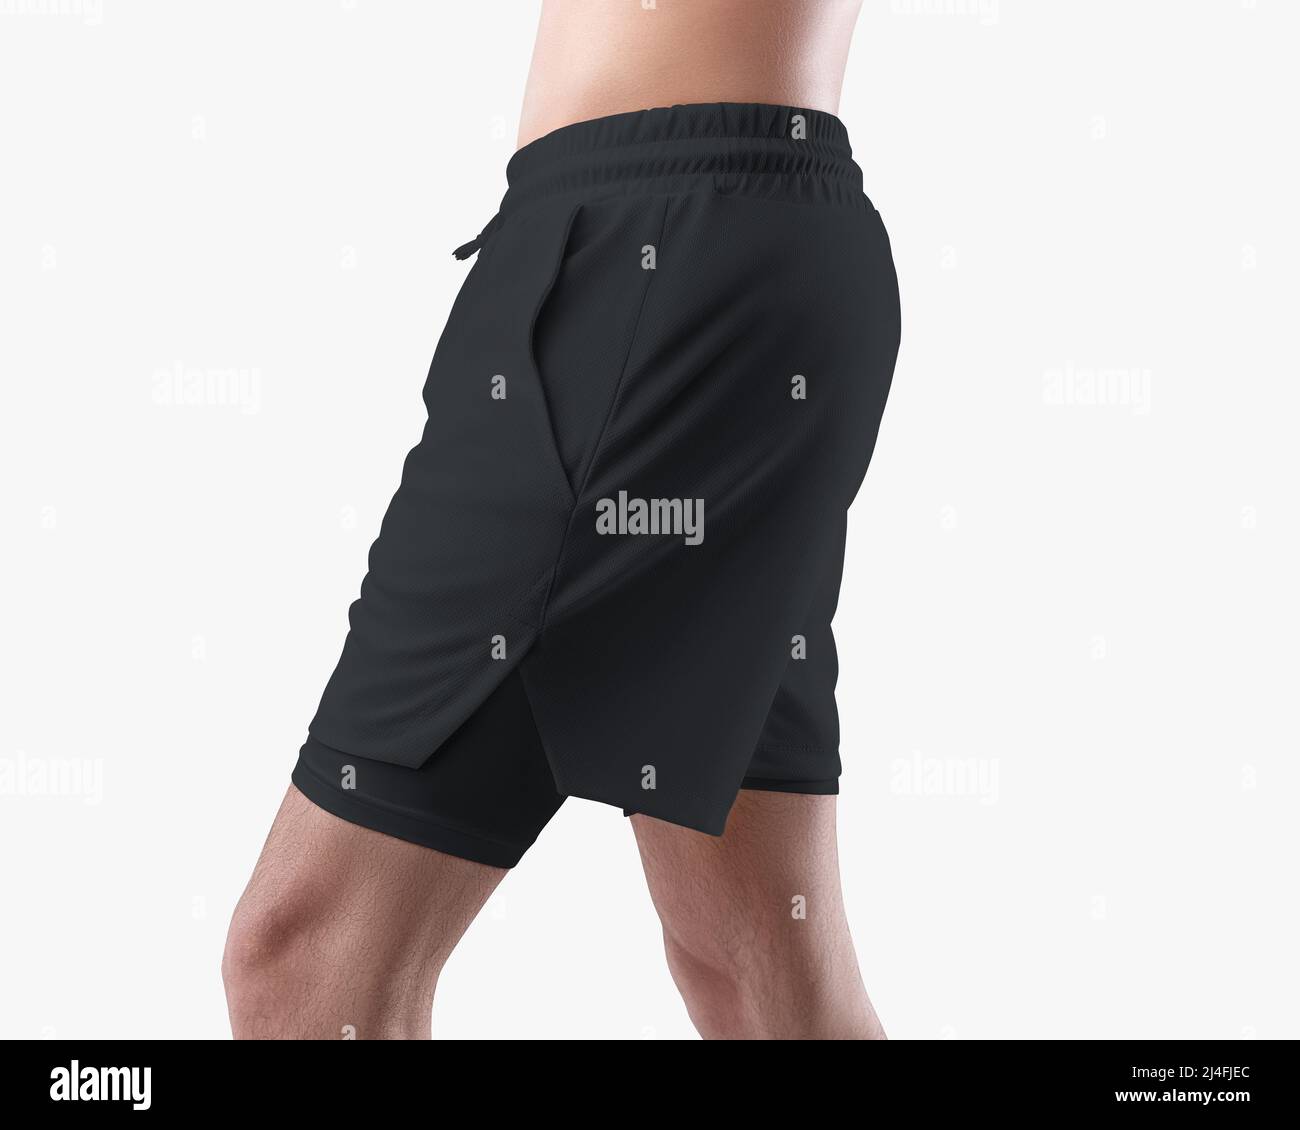 Black Shorts Template Fotos e Imágenes de stock - Alamy